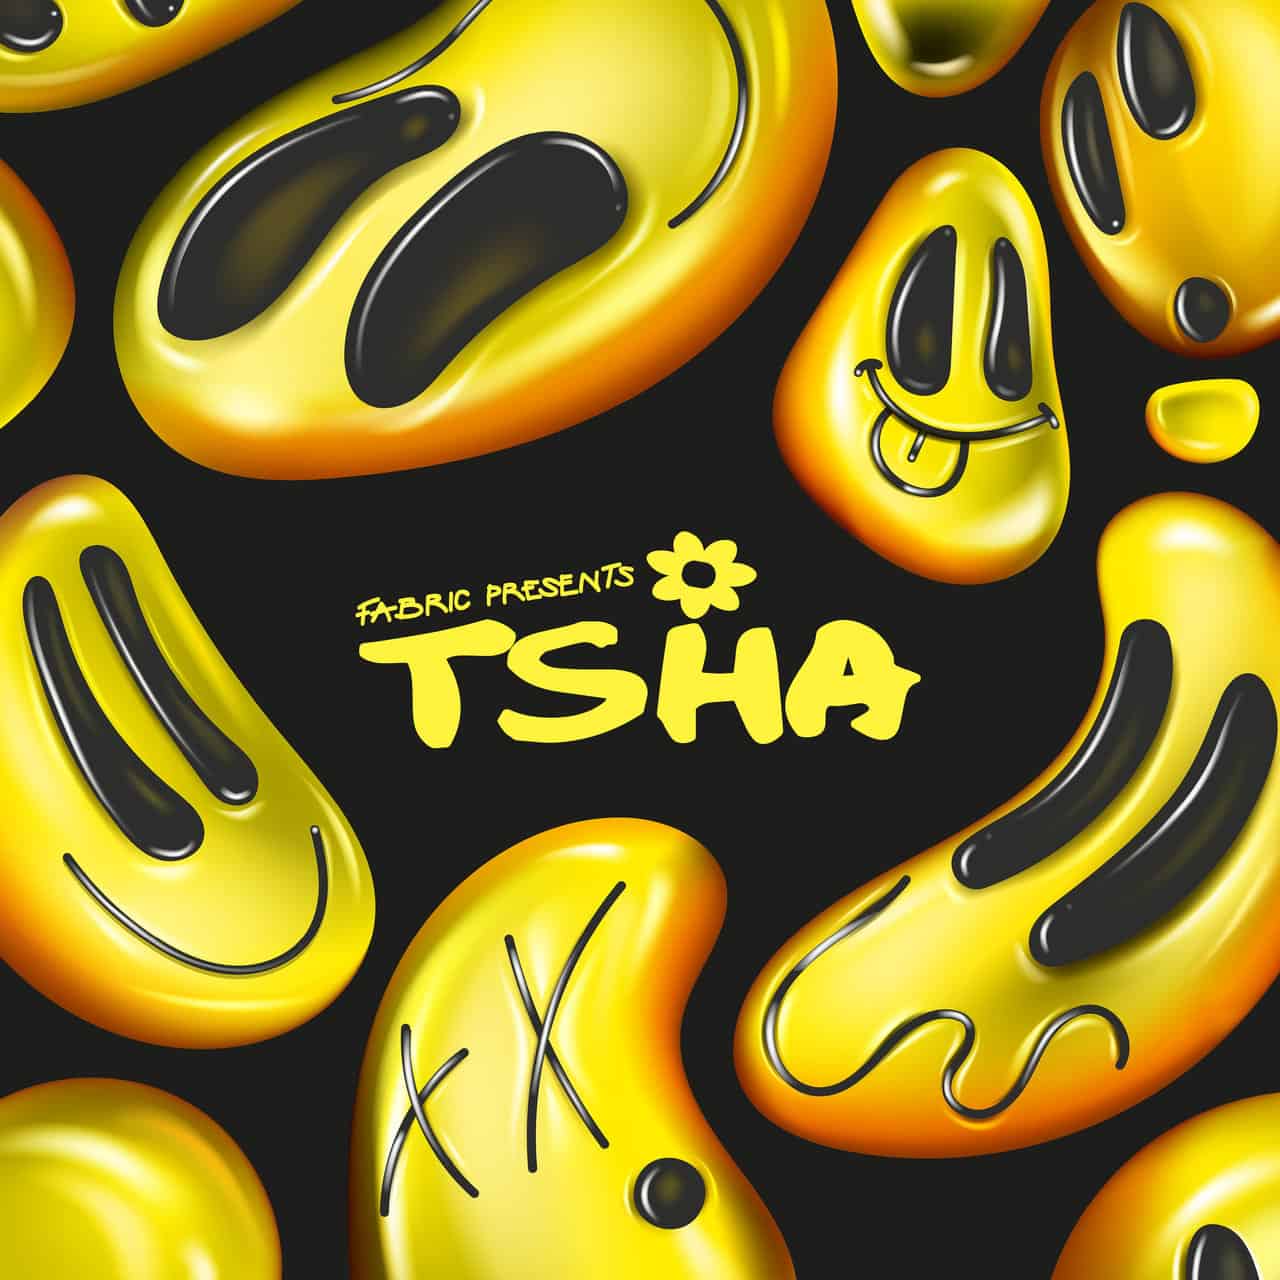 Download TSHA - fabric presents TSHA (Mixed) on Electrobuzz